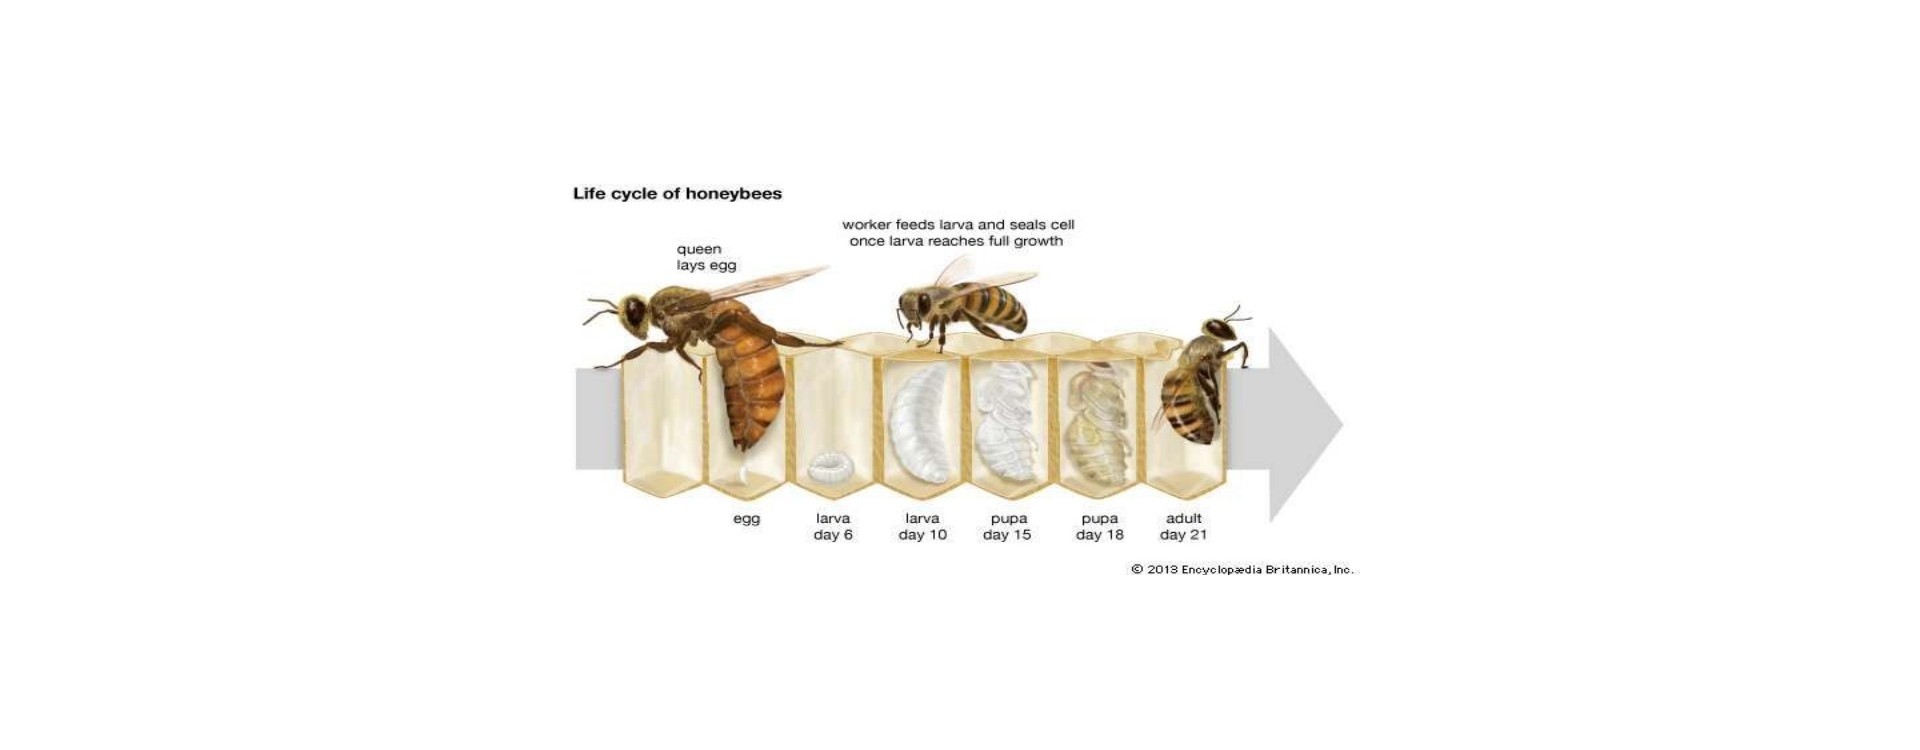 Characteristics of bee eggs